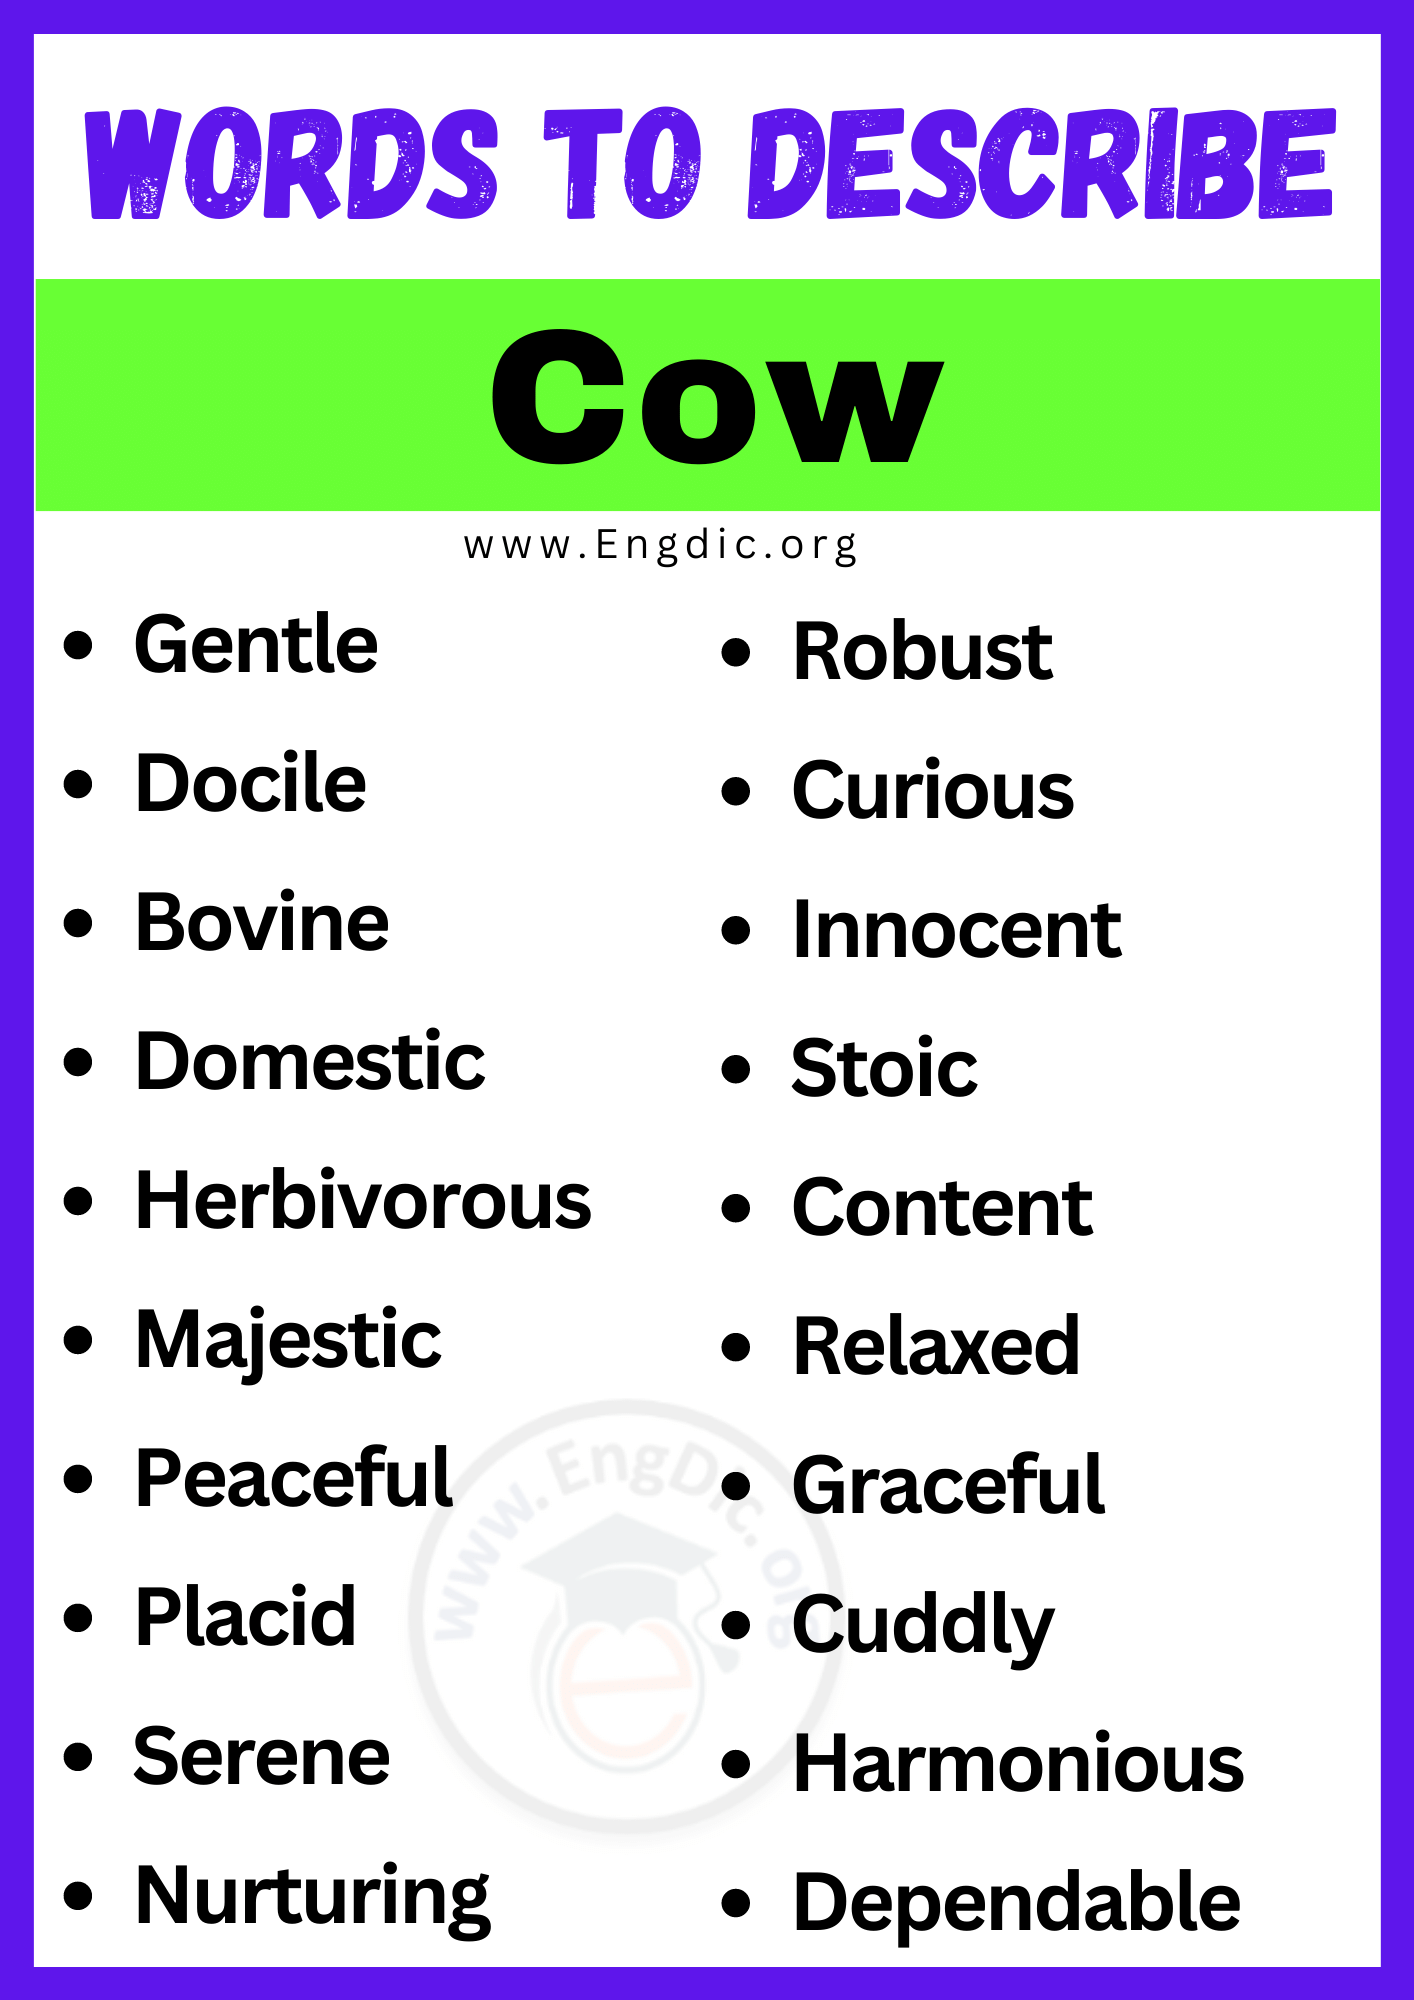 Words to Describe Cow